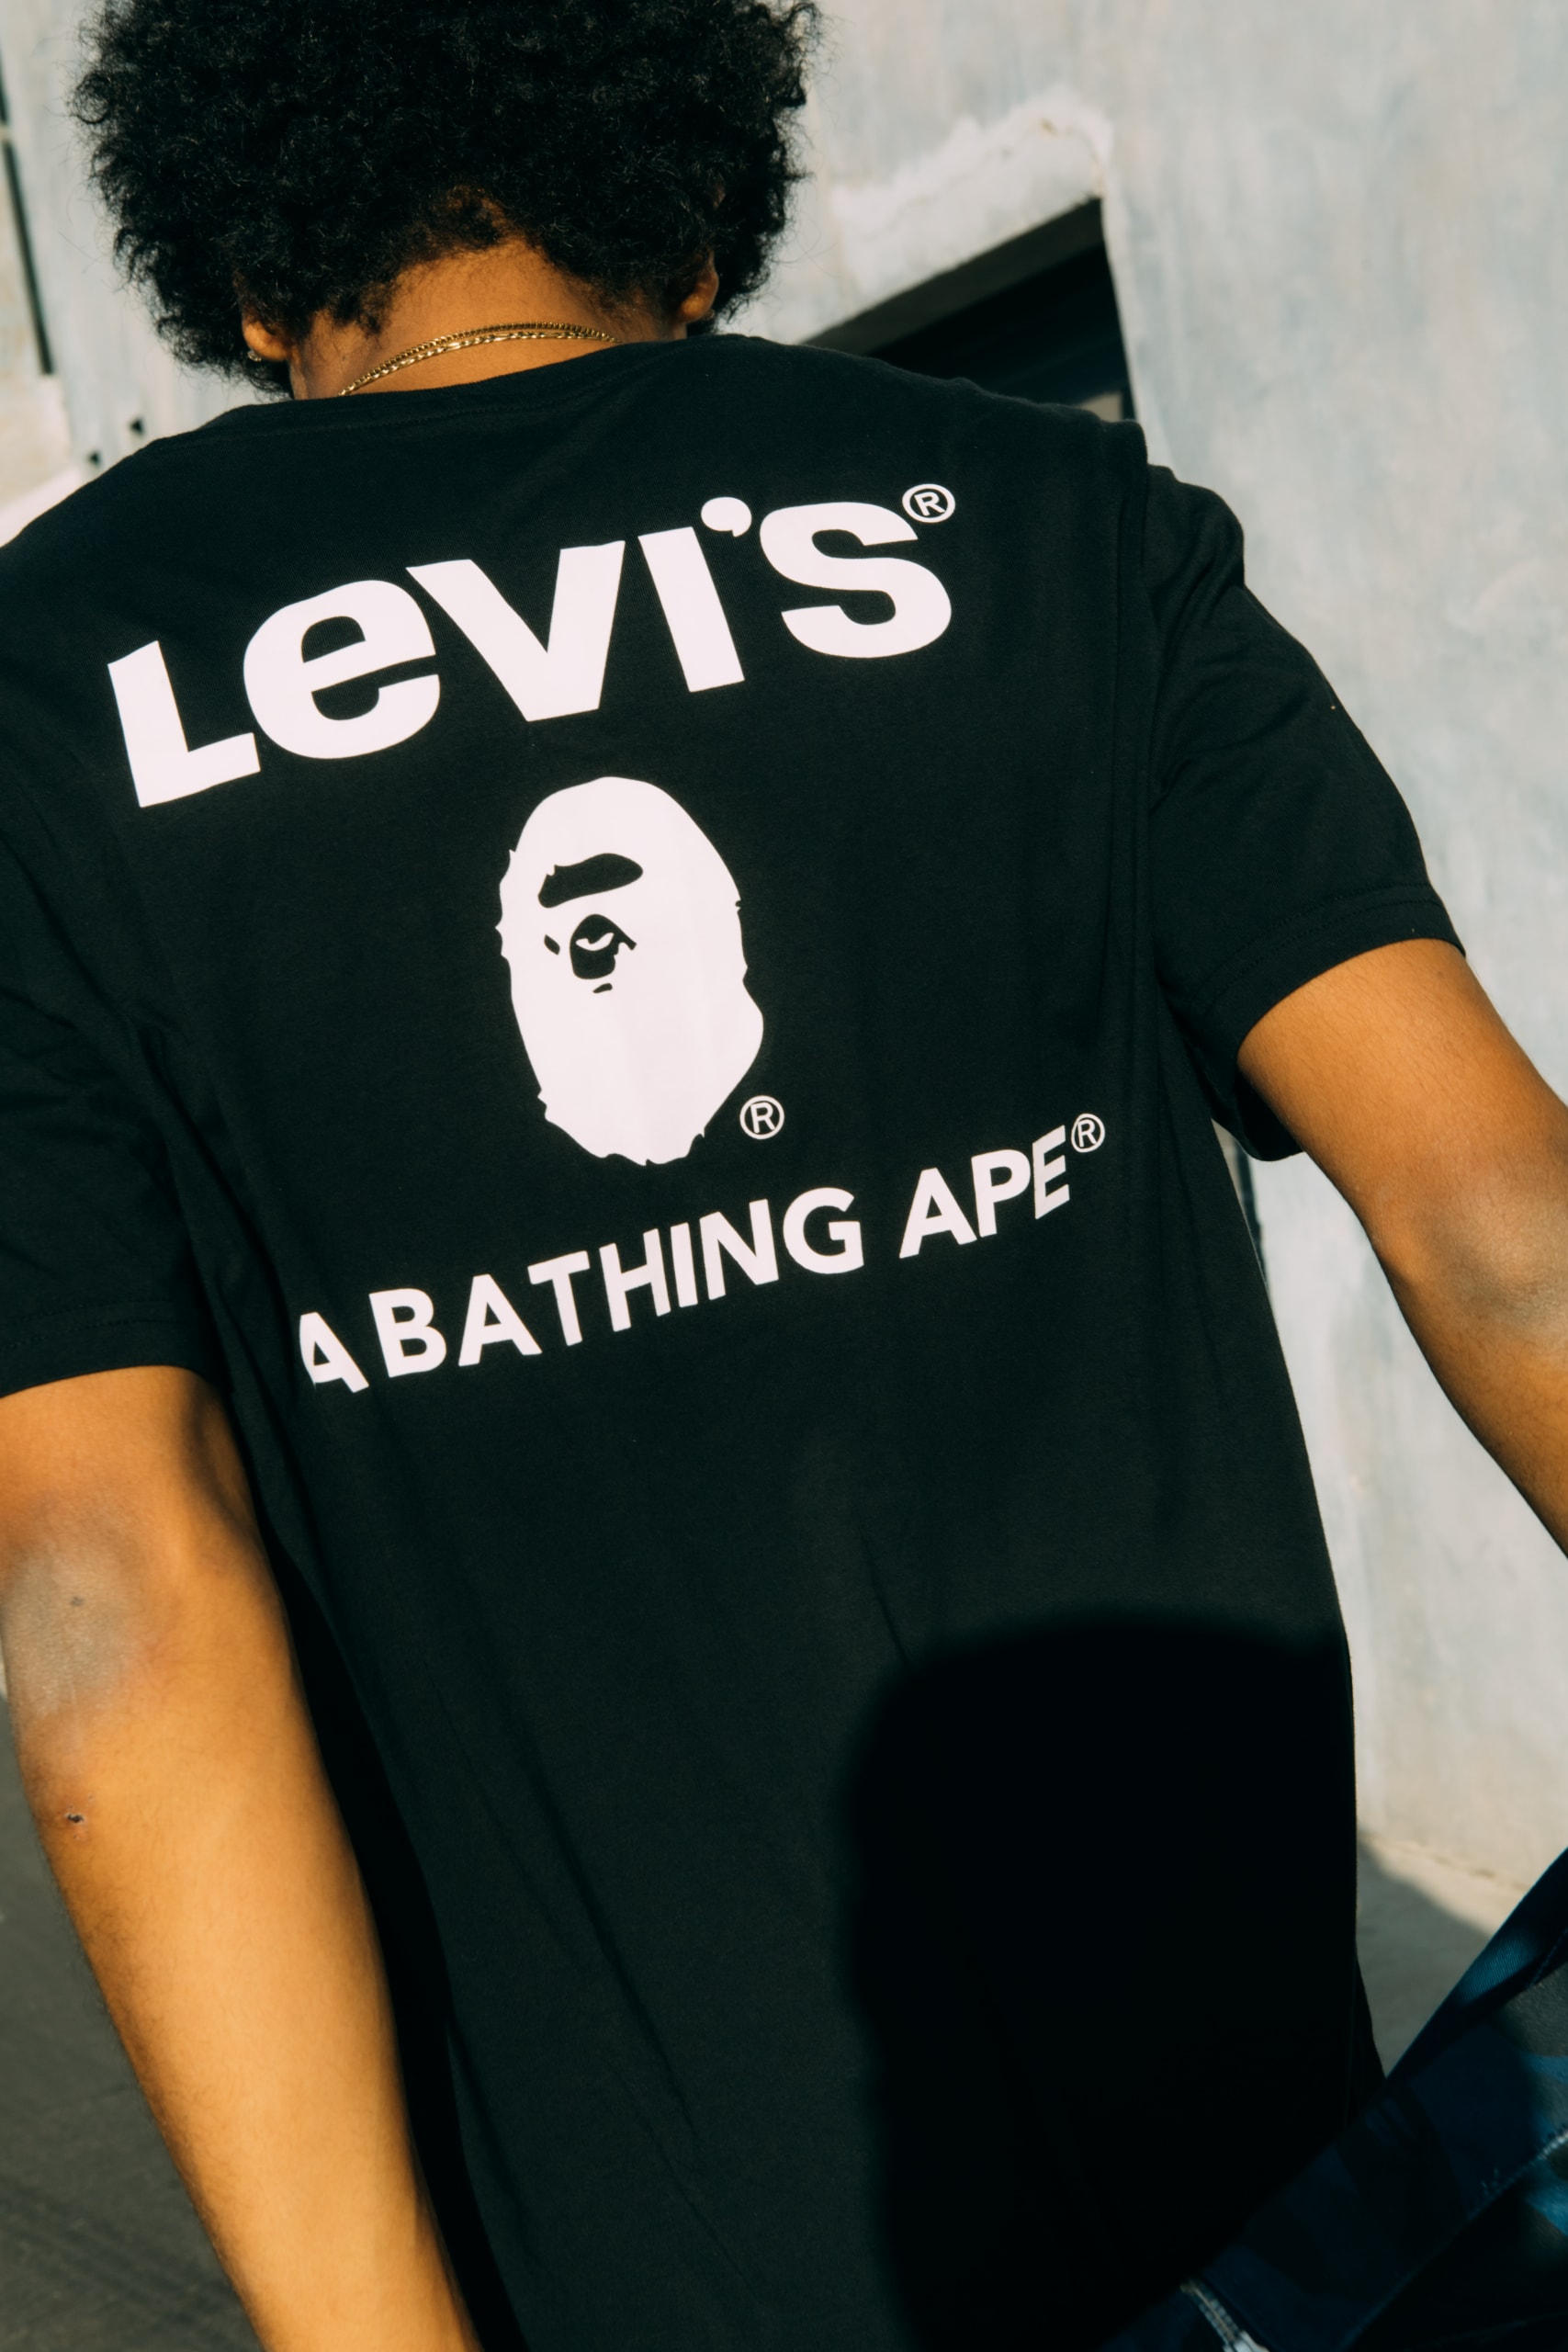 A BATHING APE® 携手 Levi's® 打造 2021 春季限定系列